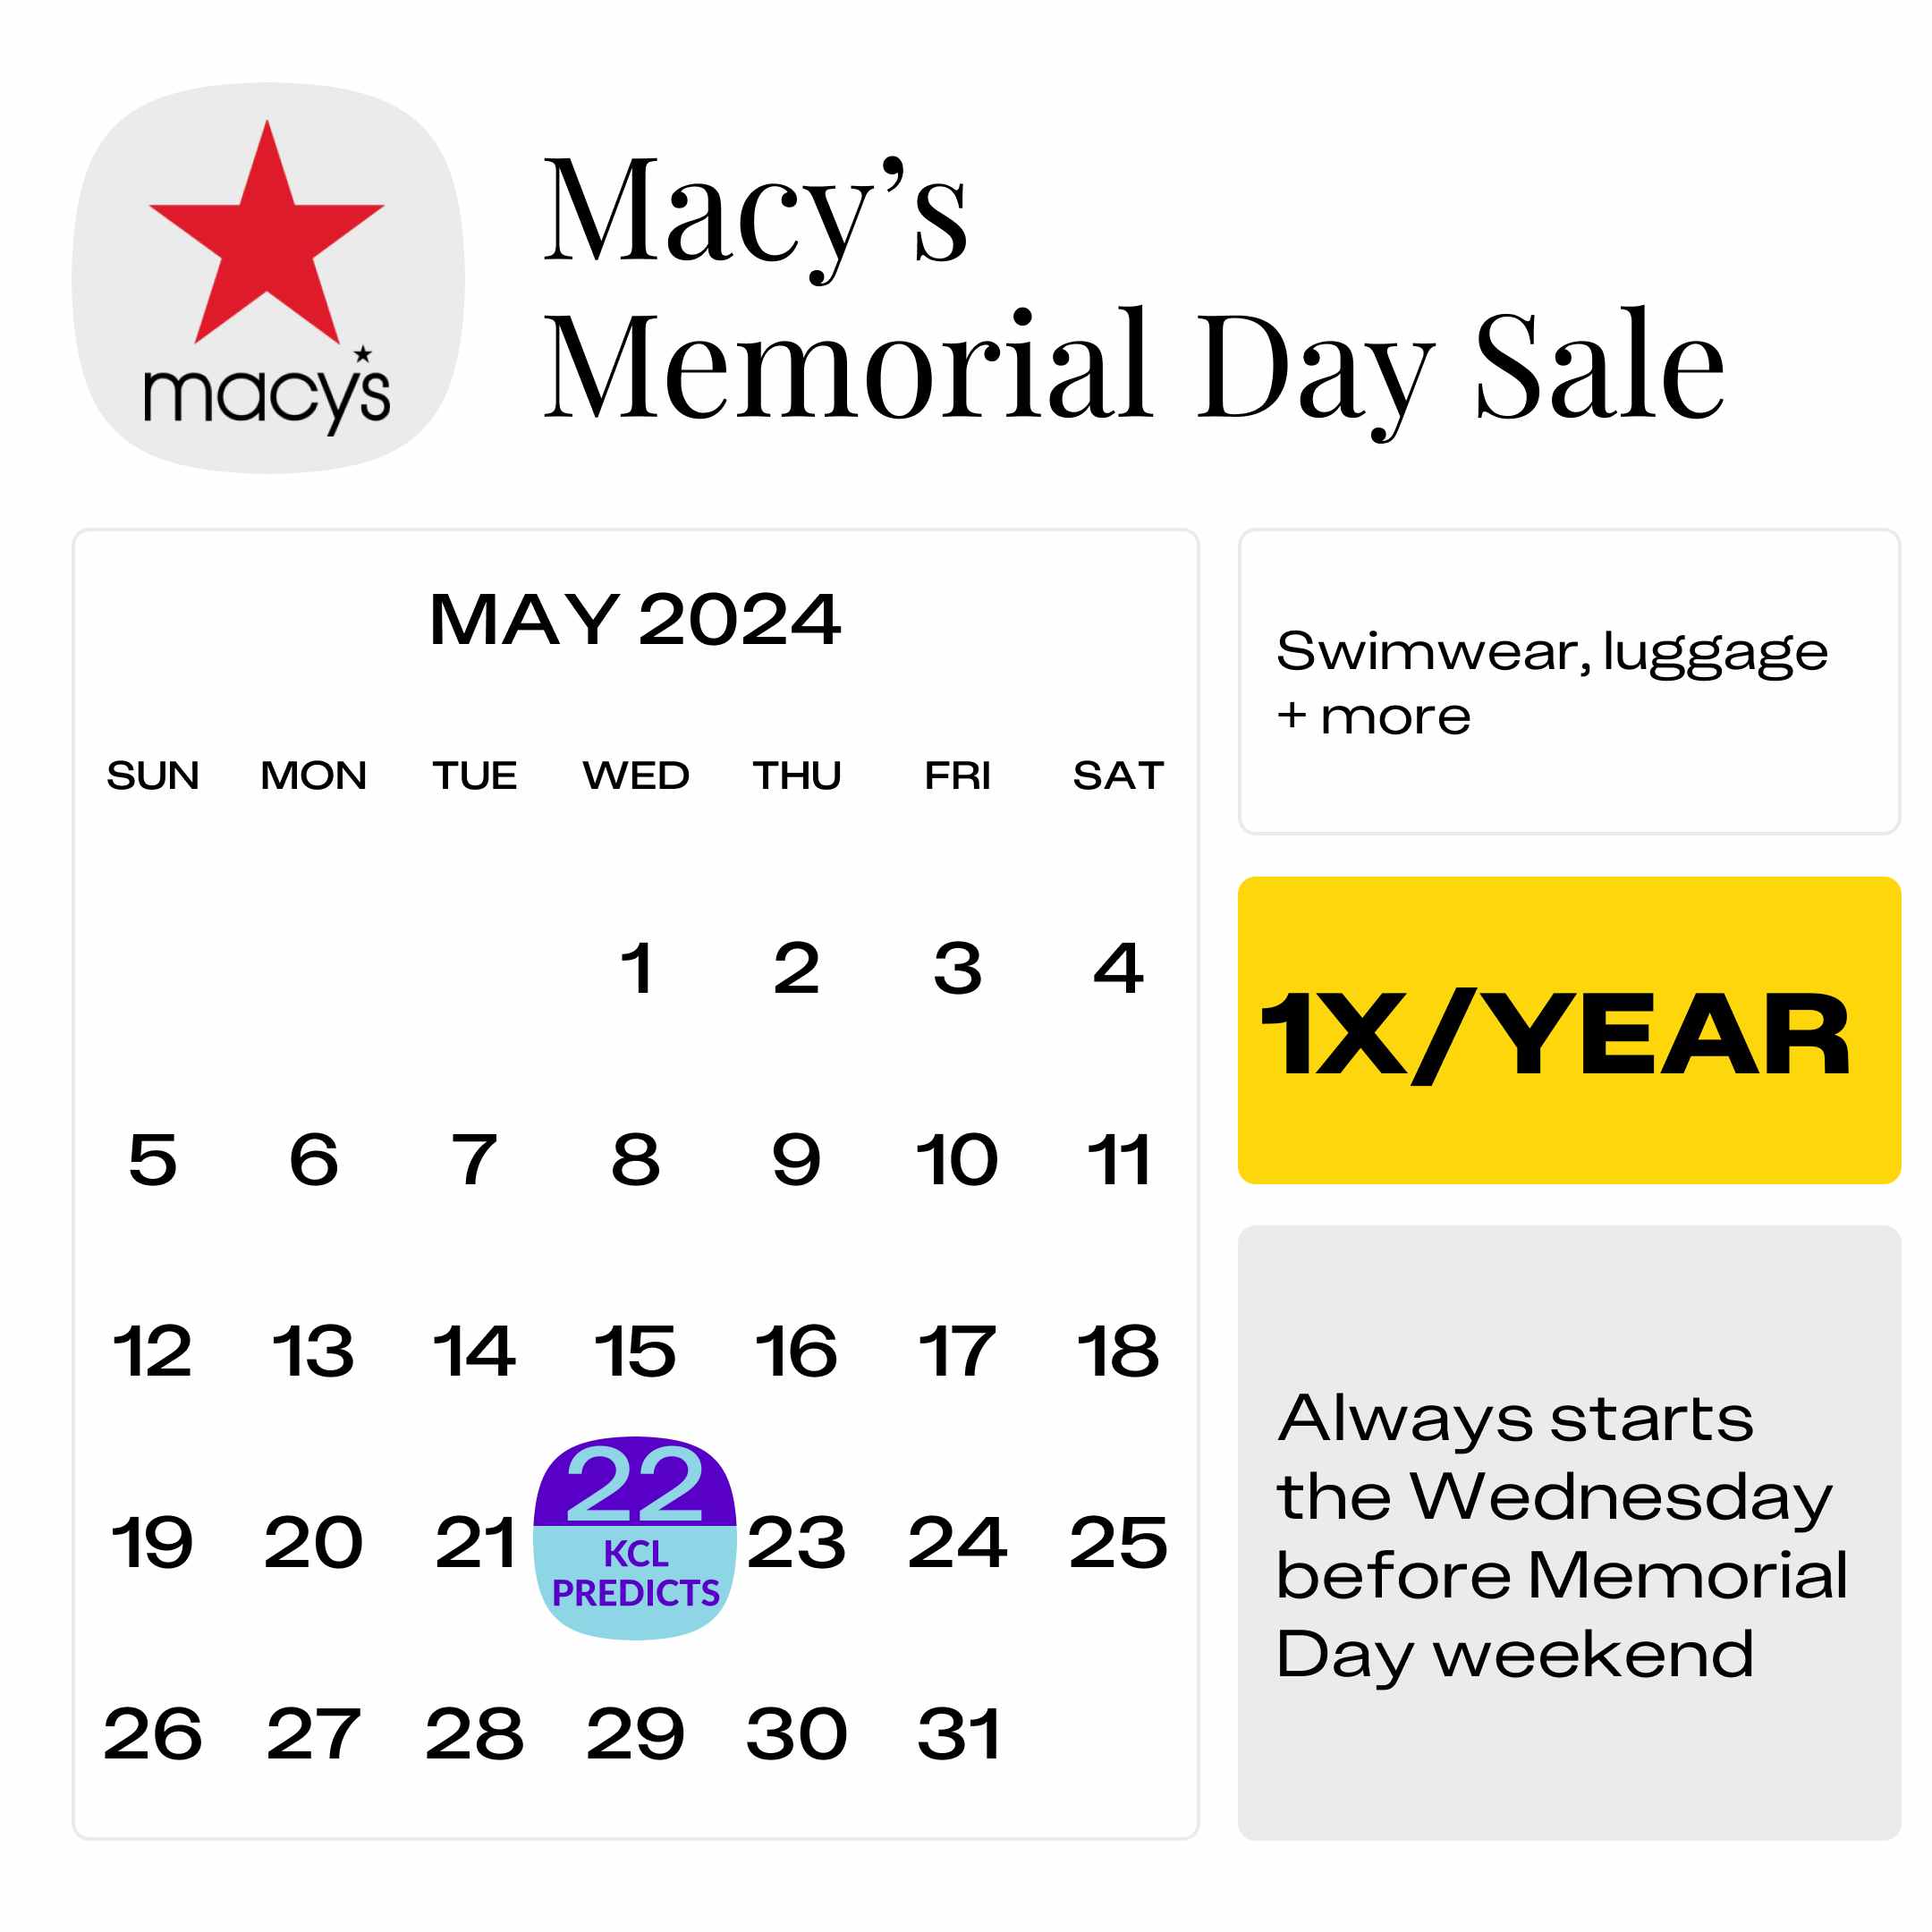 Macys-Memorial-Day-Sale